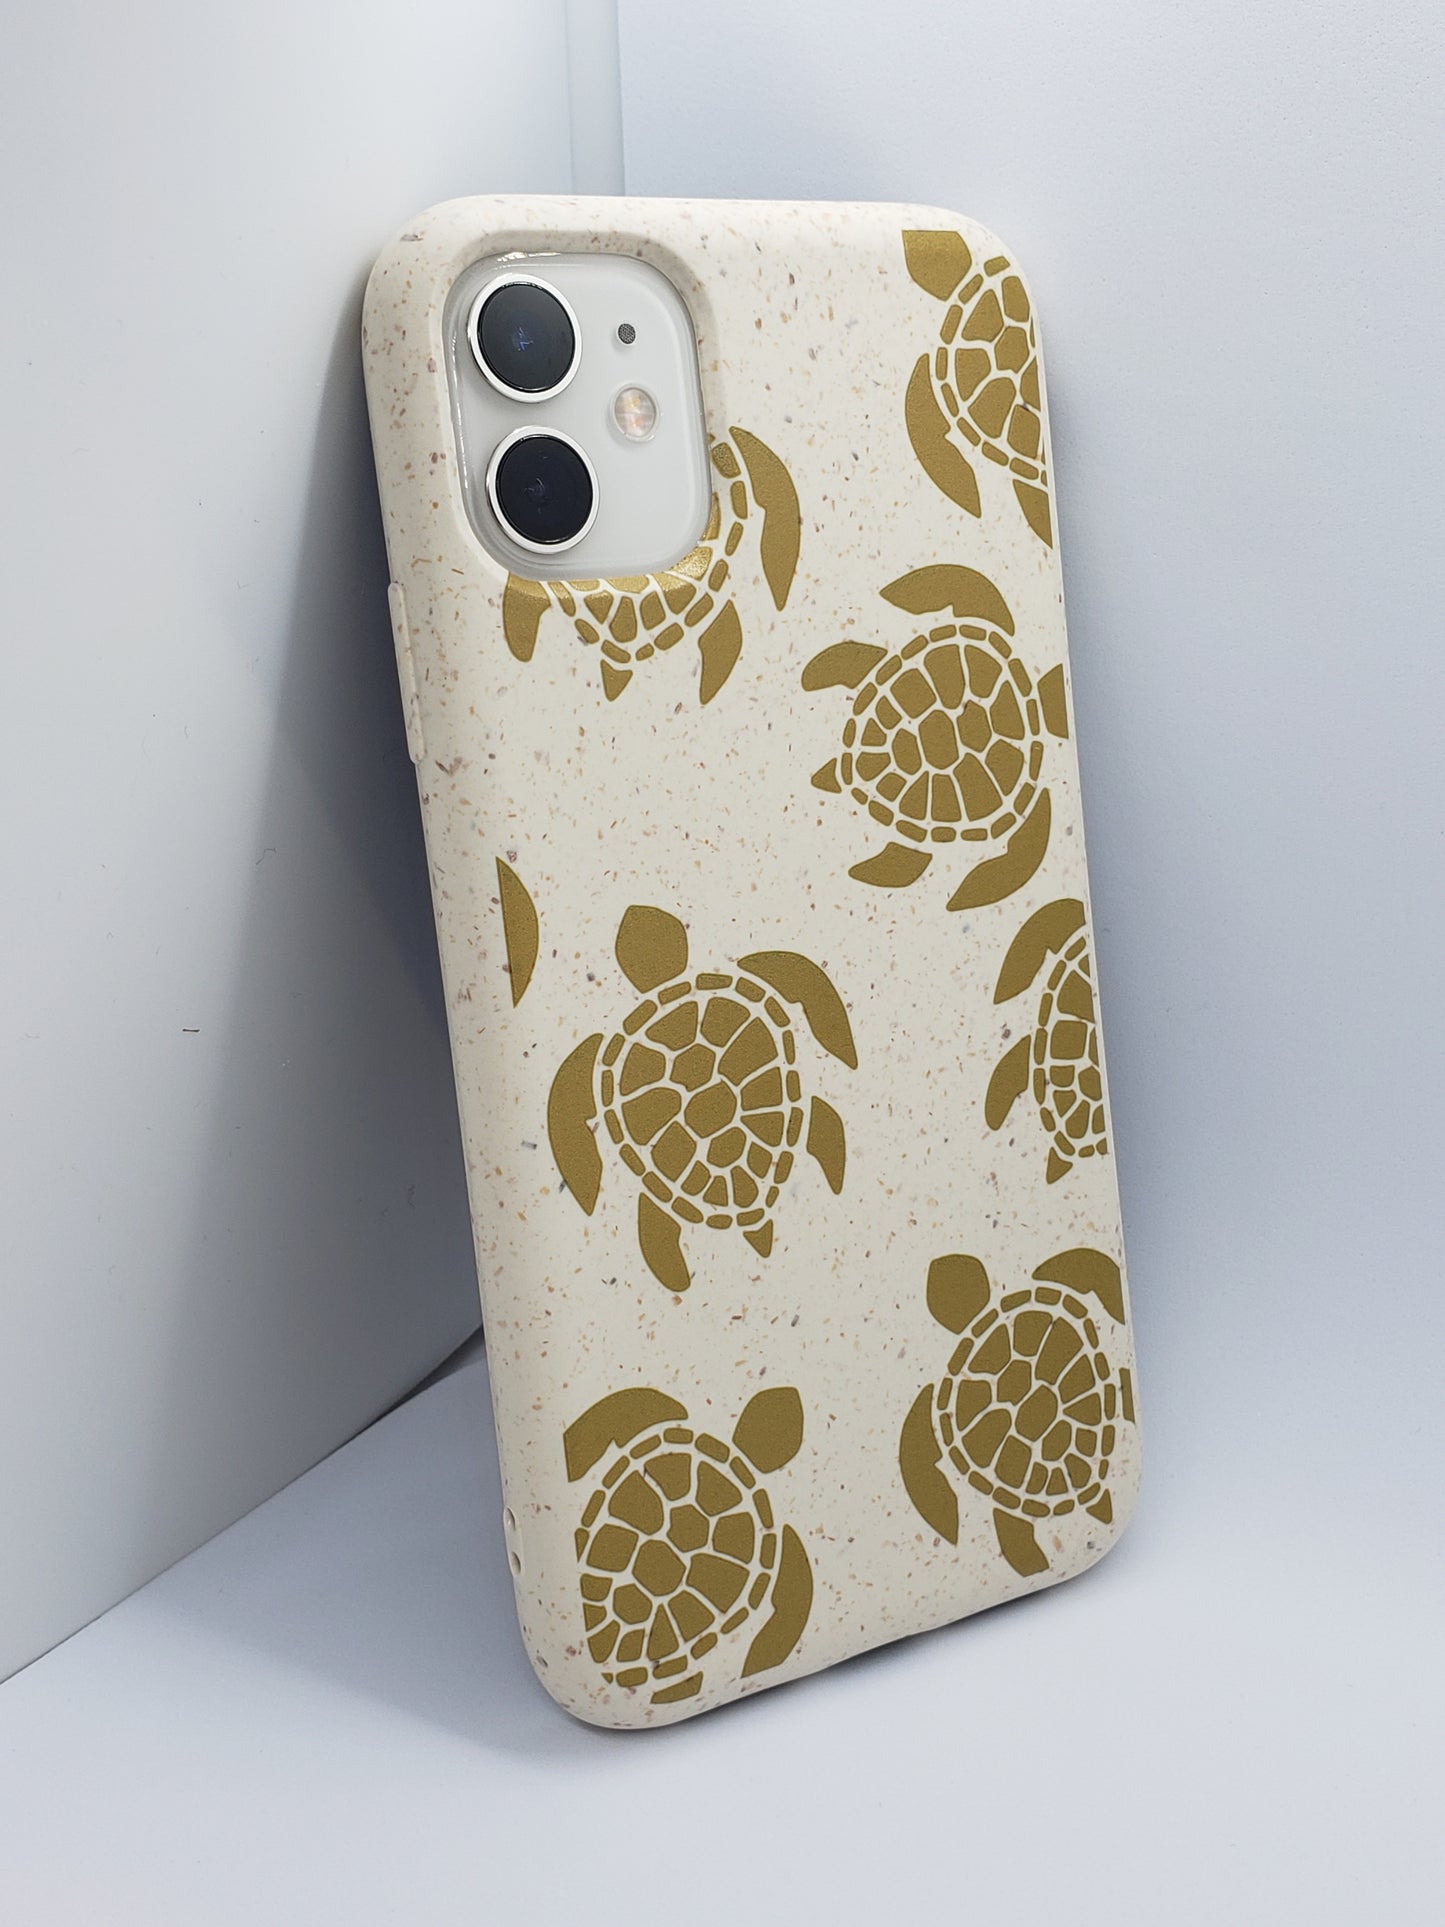 Coque iPhone compostable biodégradable tortues de mer